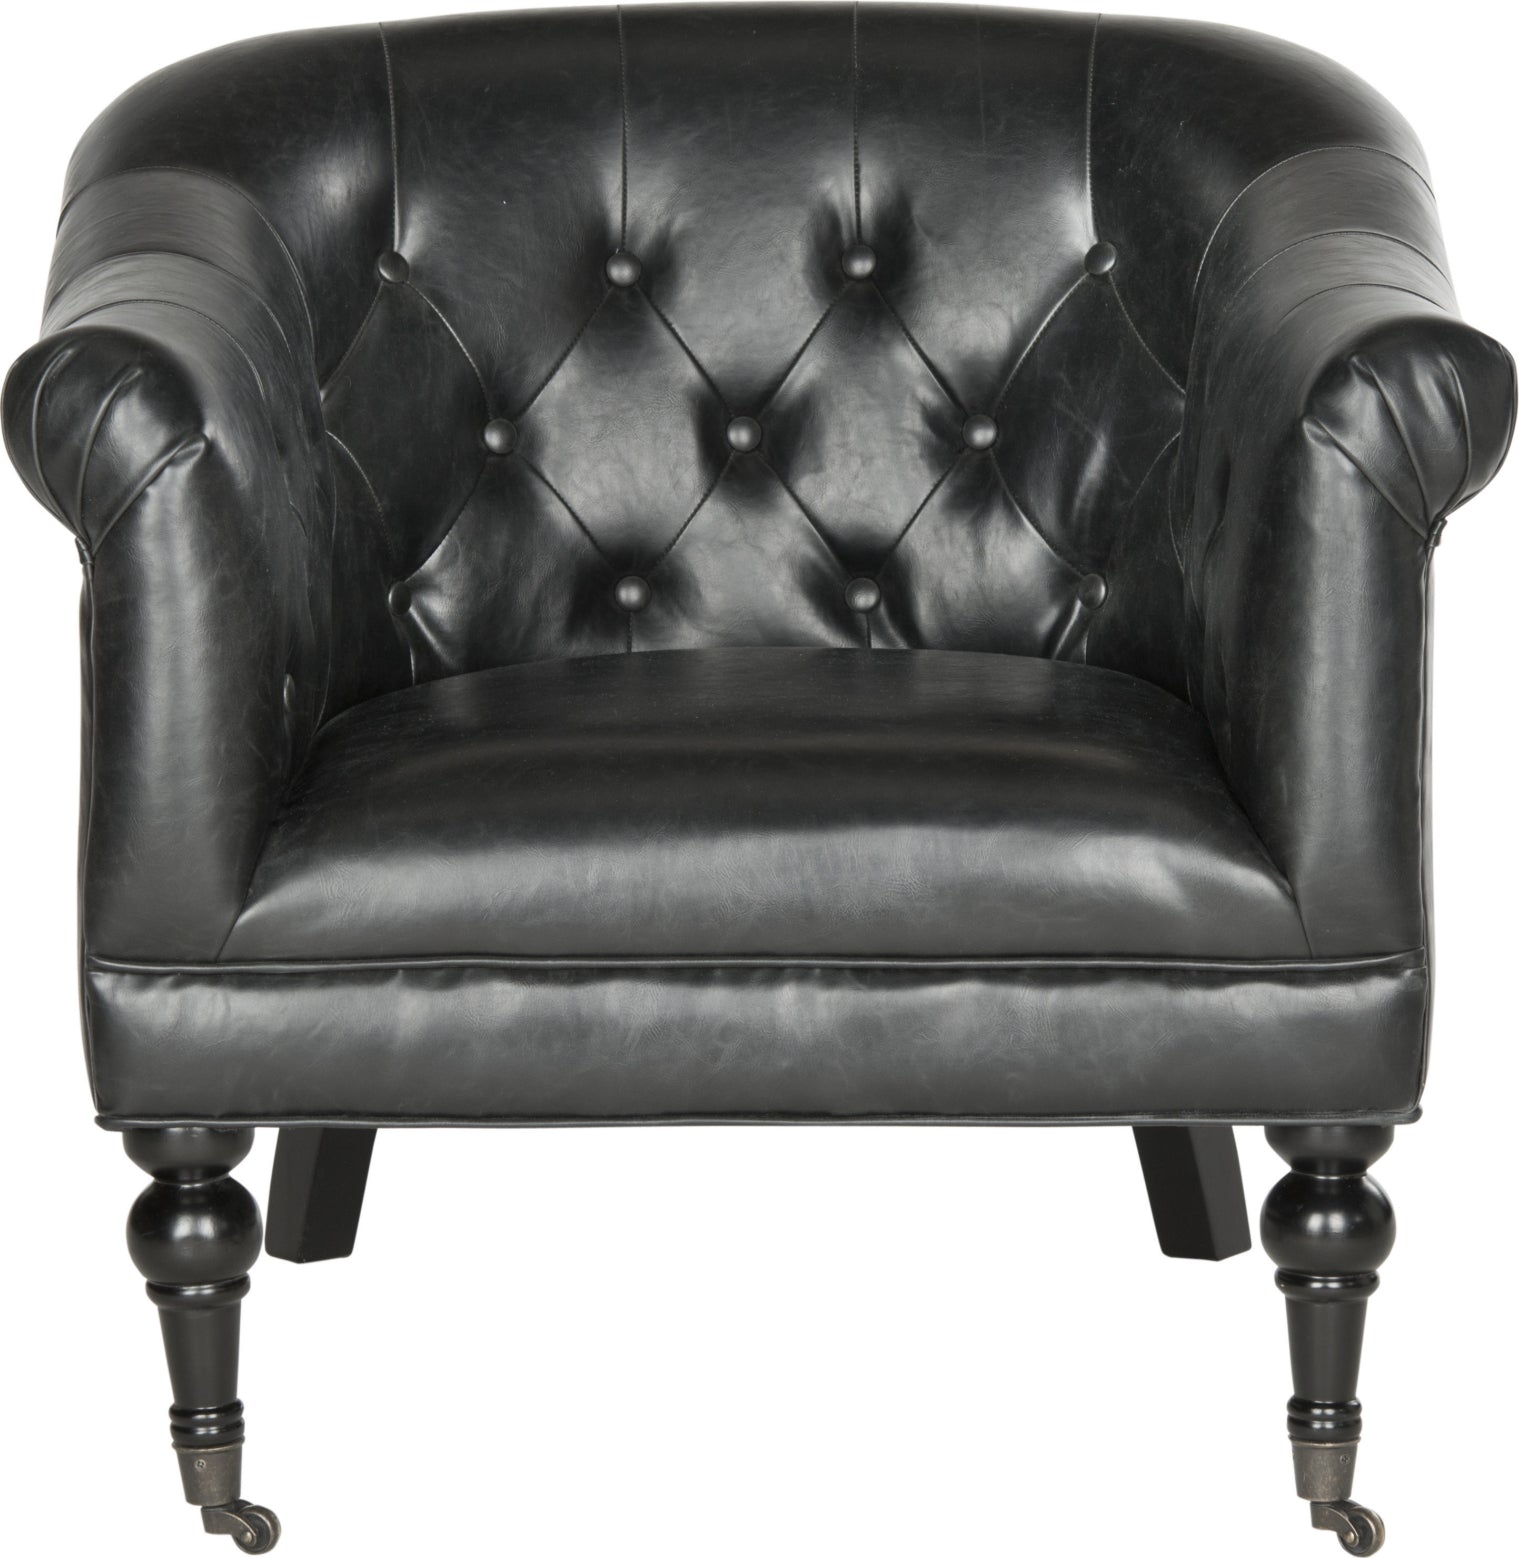 Safavieh Nicolas Tufted Club Chair Antique Black and Furniture main image